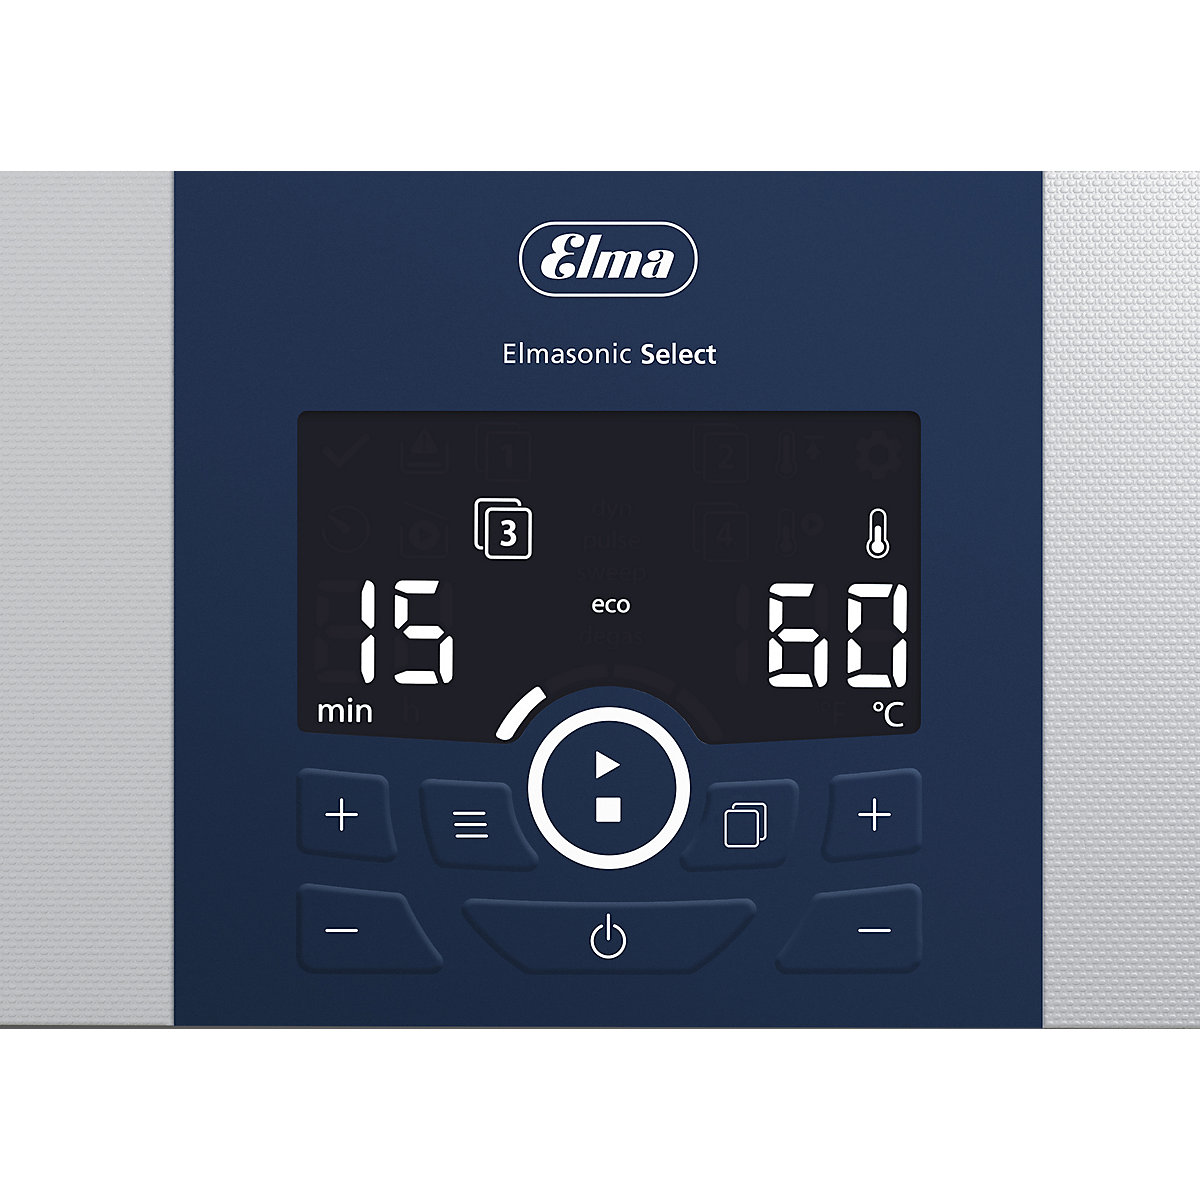 Dispozitiv ultrasonic – Elma (Imagine produs 17)-16